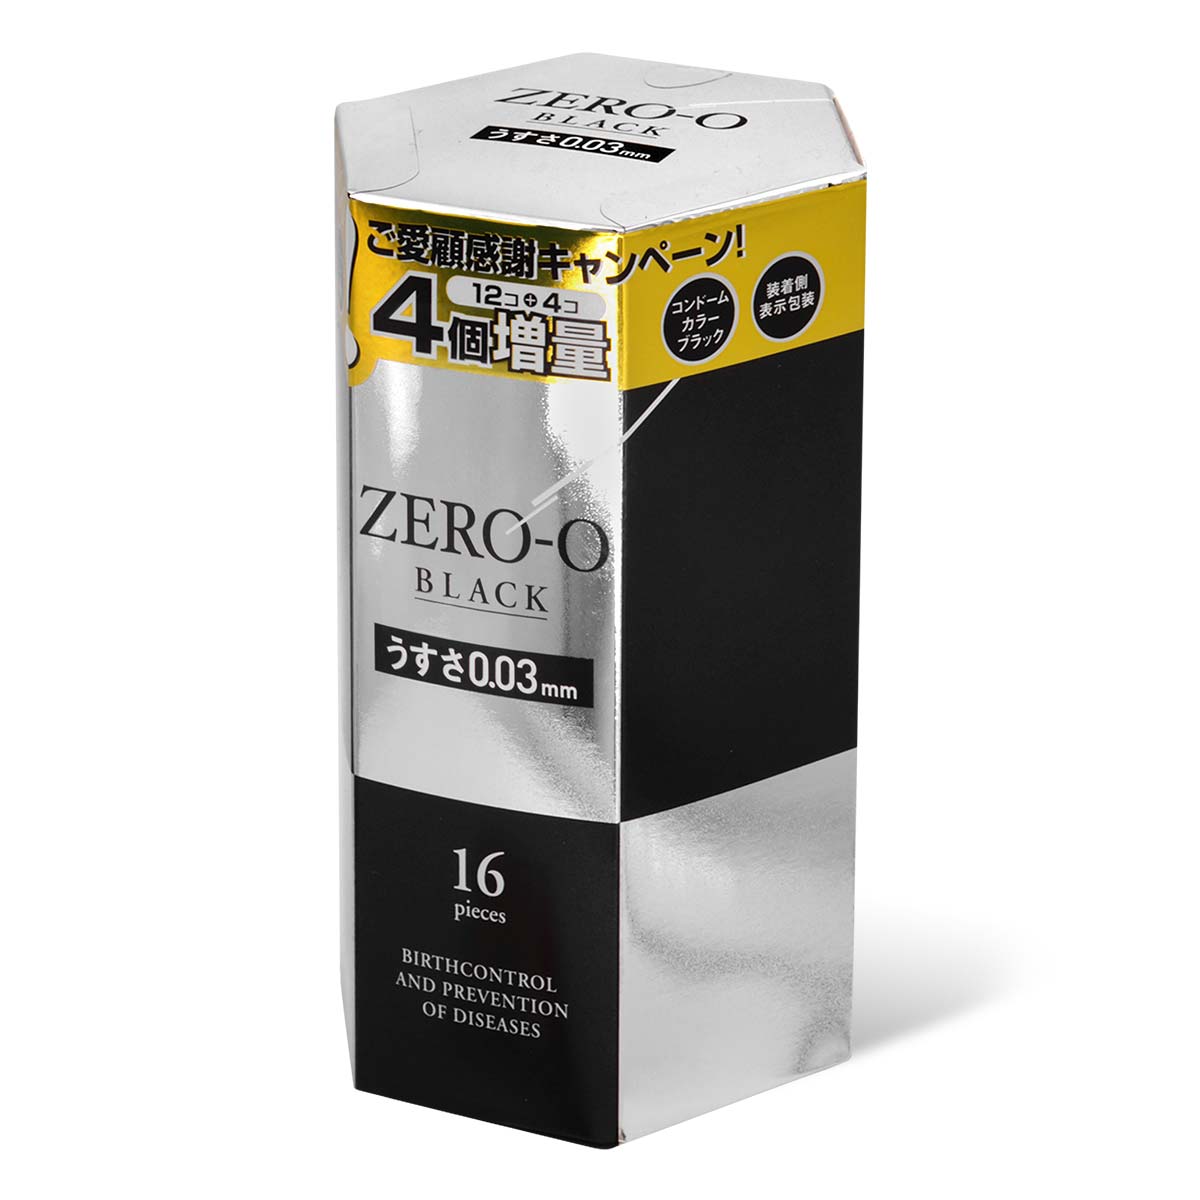 Fuji Zero 0 - 0.03 Black 16's Pack (Mr. Dom Flower) Latex Condom-p_1